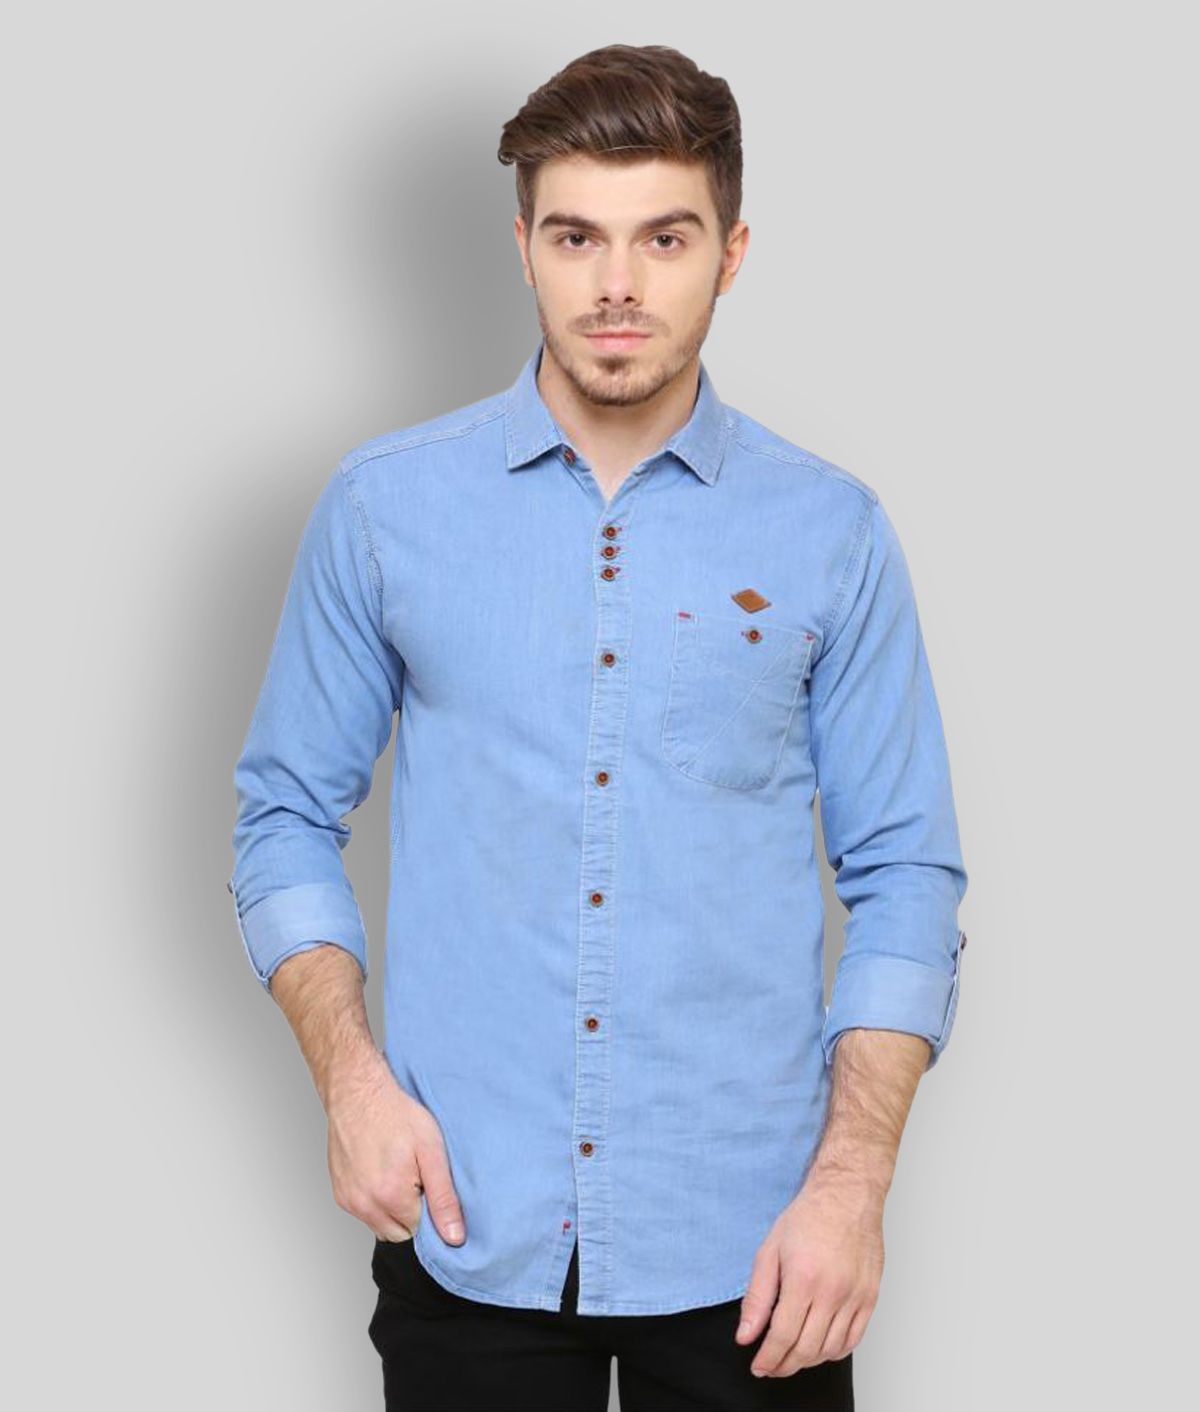     			Kuons Avenue - Light Blue Denim Regular Fit Men's Casual Shirt (Pack of 1)